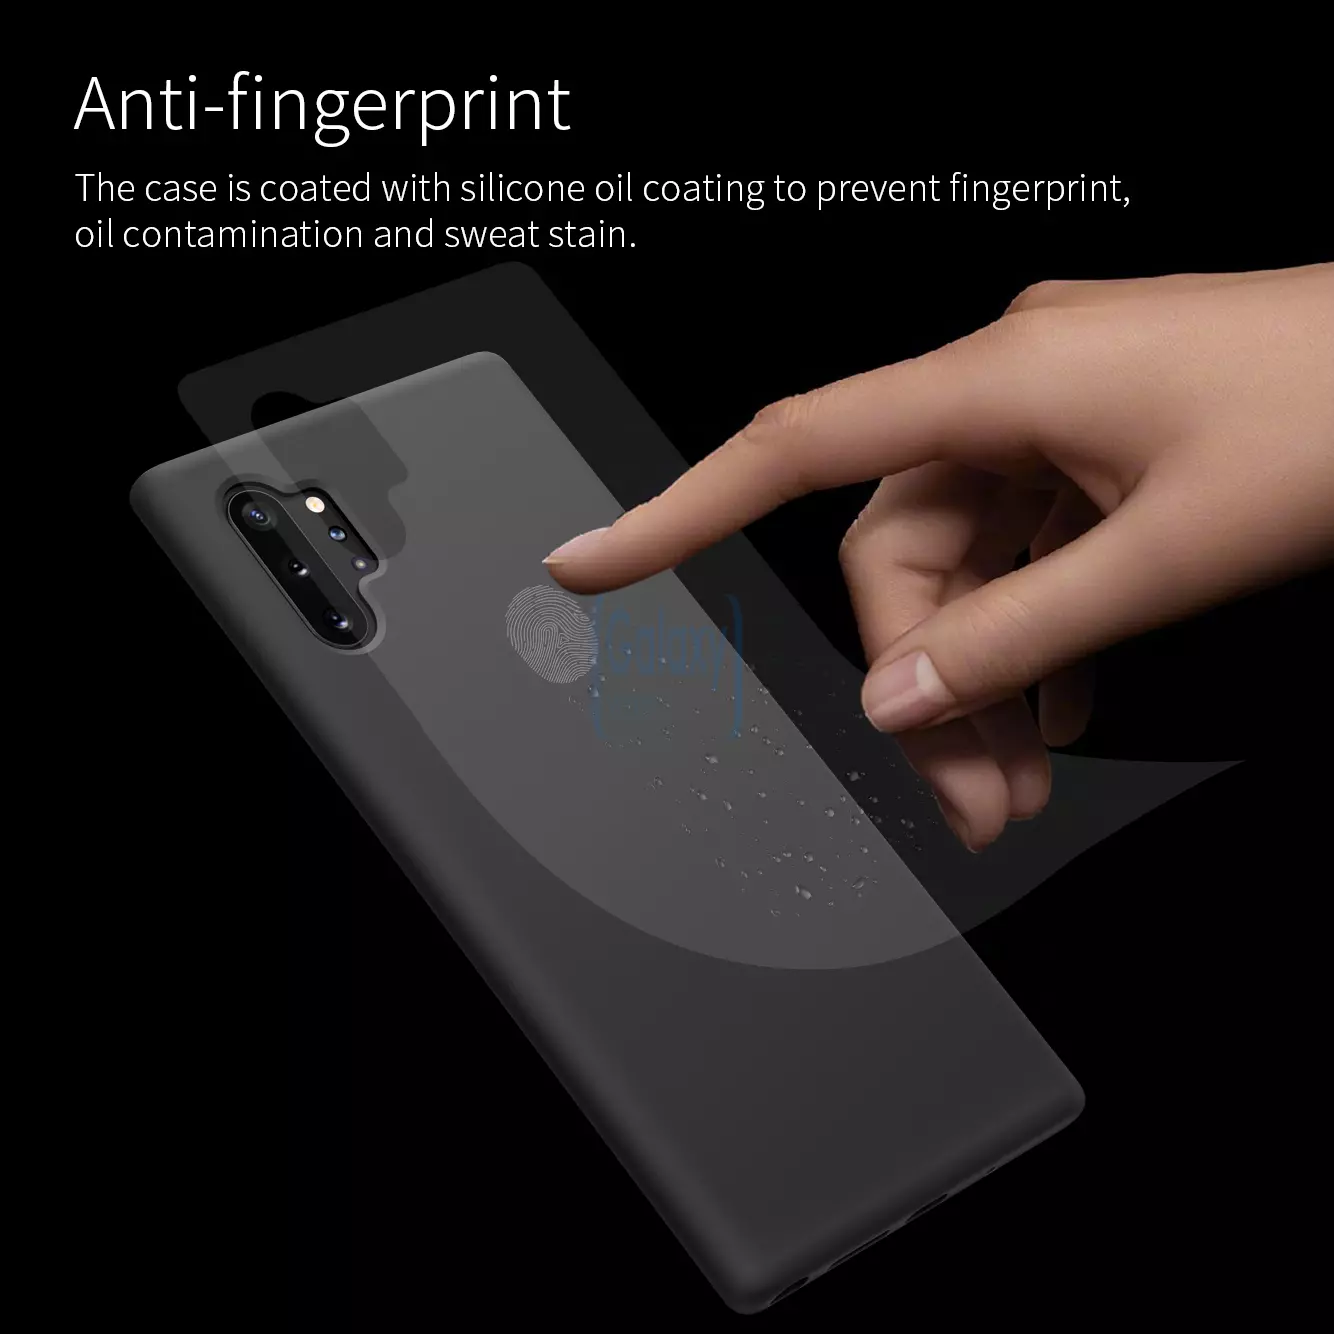 Чехол бампер Nillkin Pure Case для Samsung Galaxy Note 10 Plus Black (Черный)